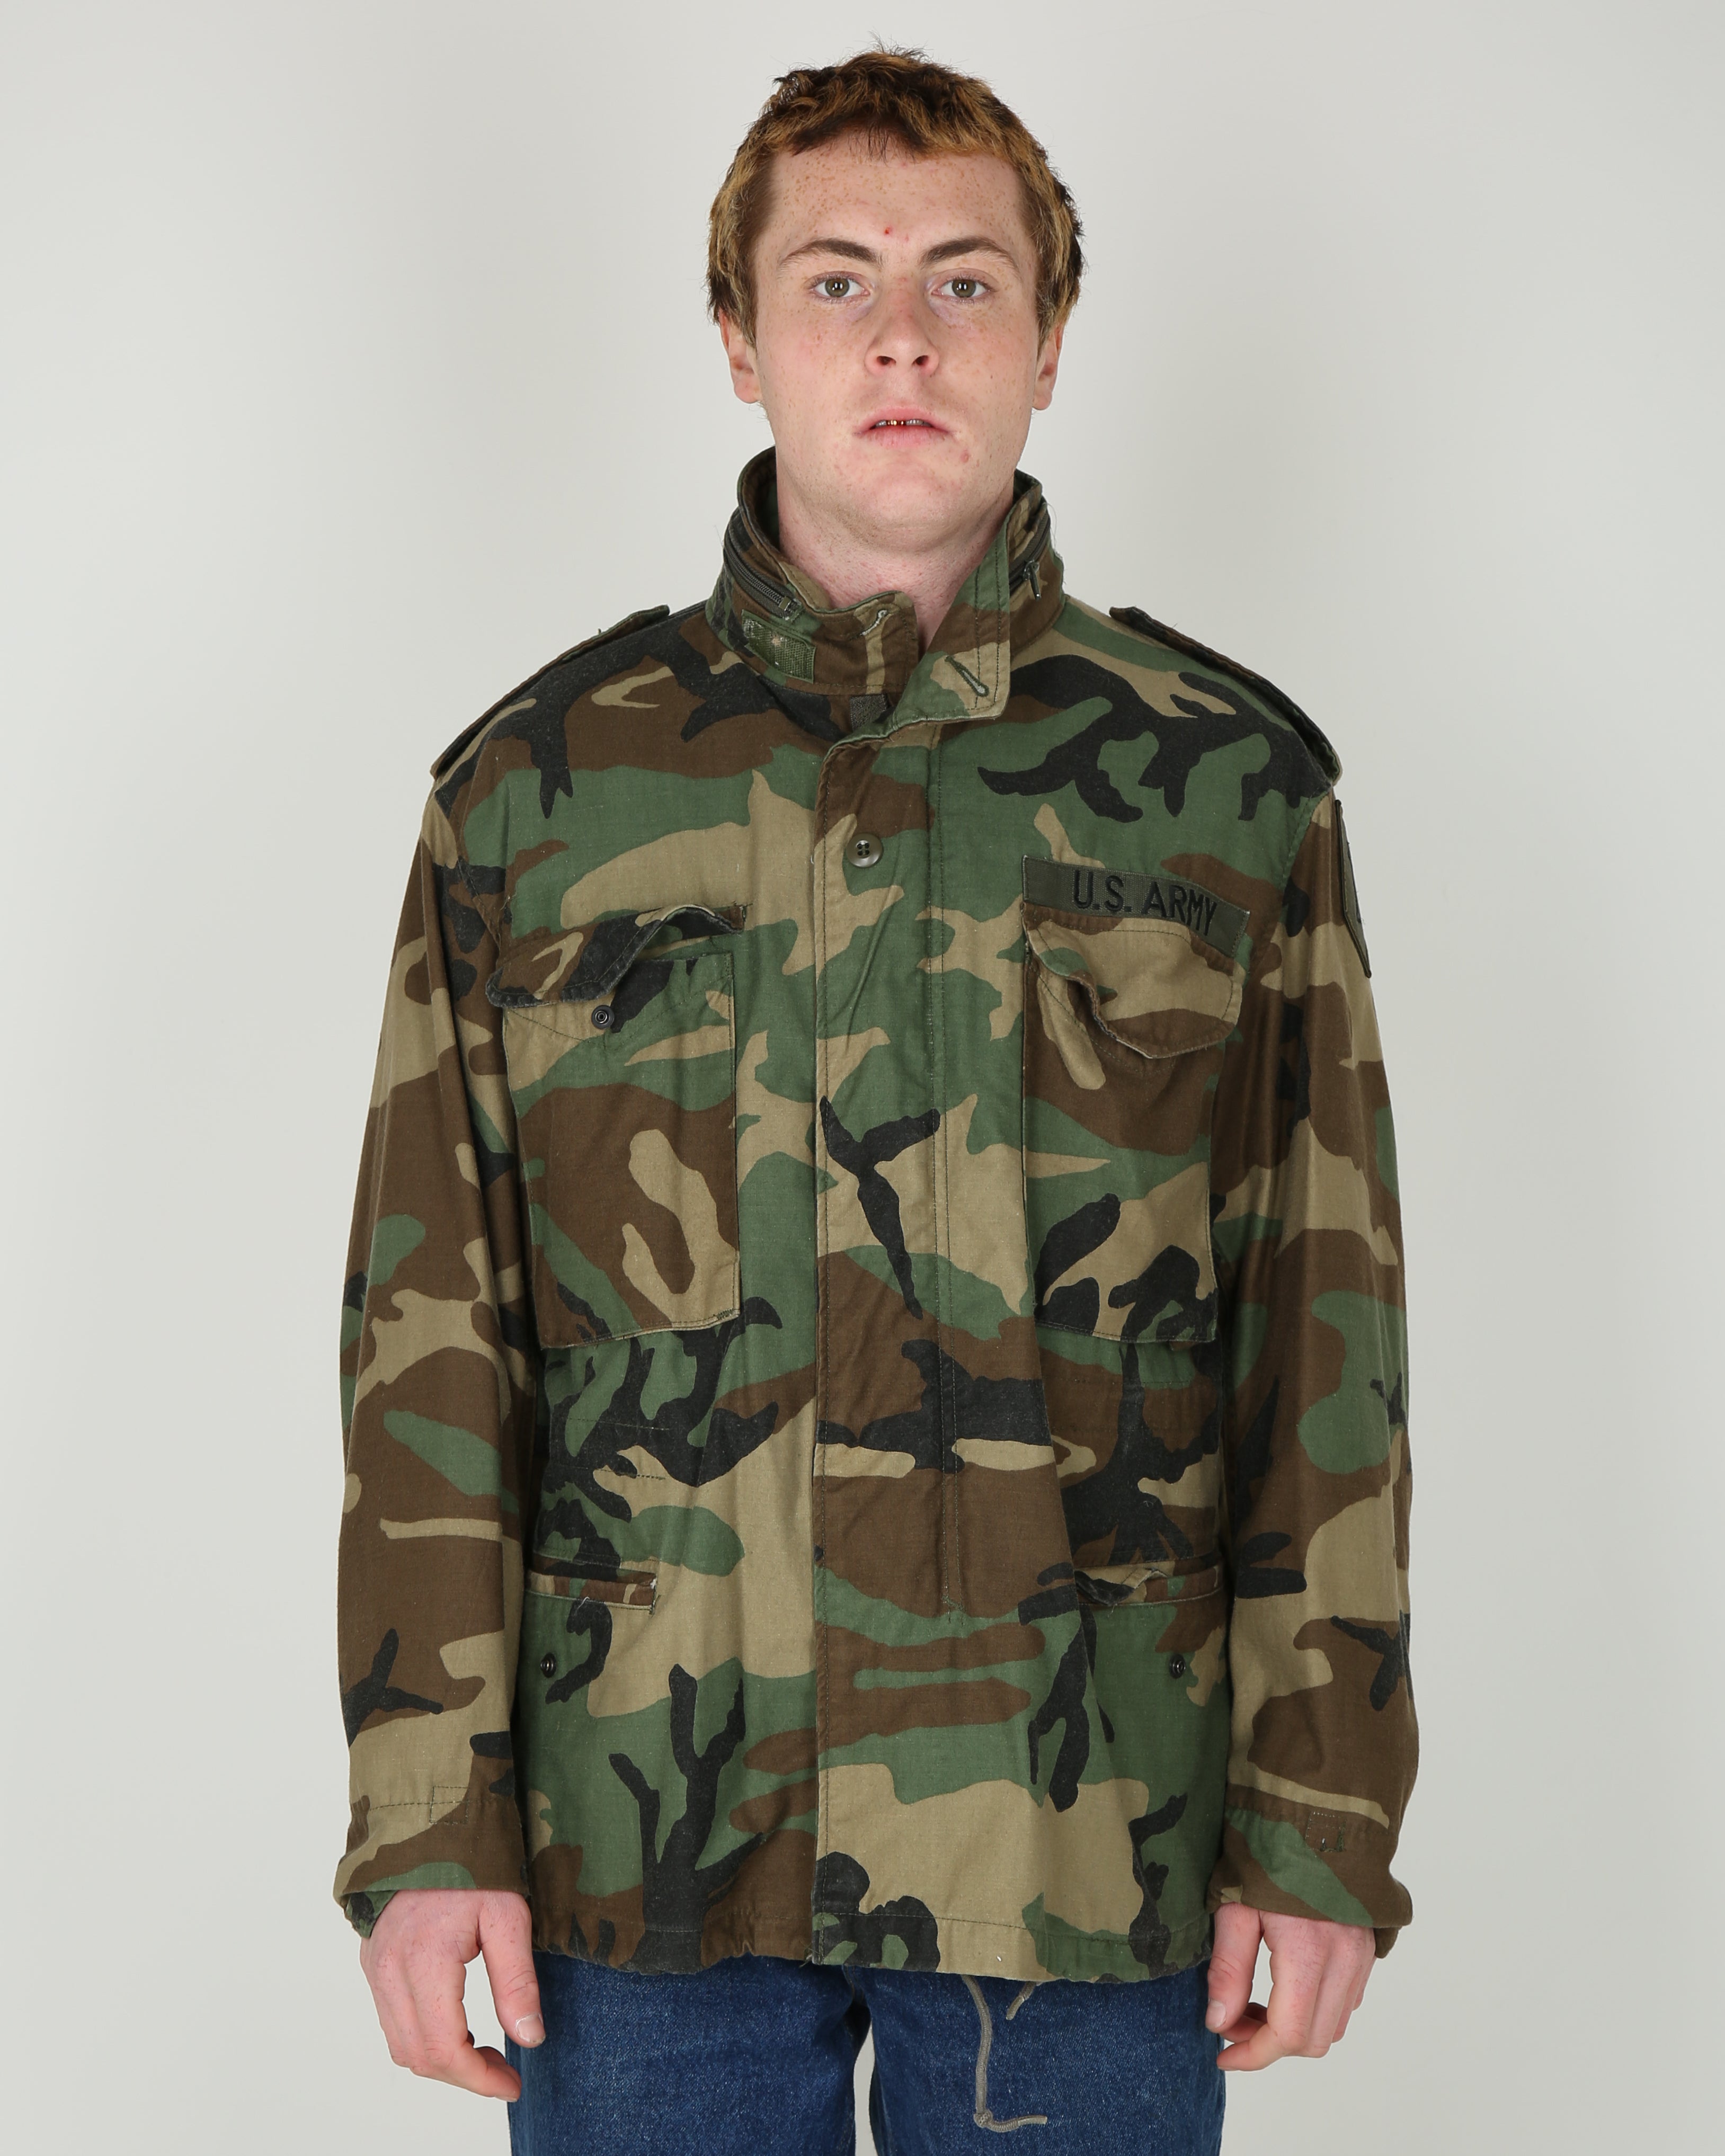 vidne Beundringsværdig kalv 1996 vintage us army m81 woodland camouflage m-65 field jakke - mediu -  Rokit